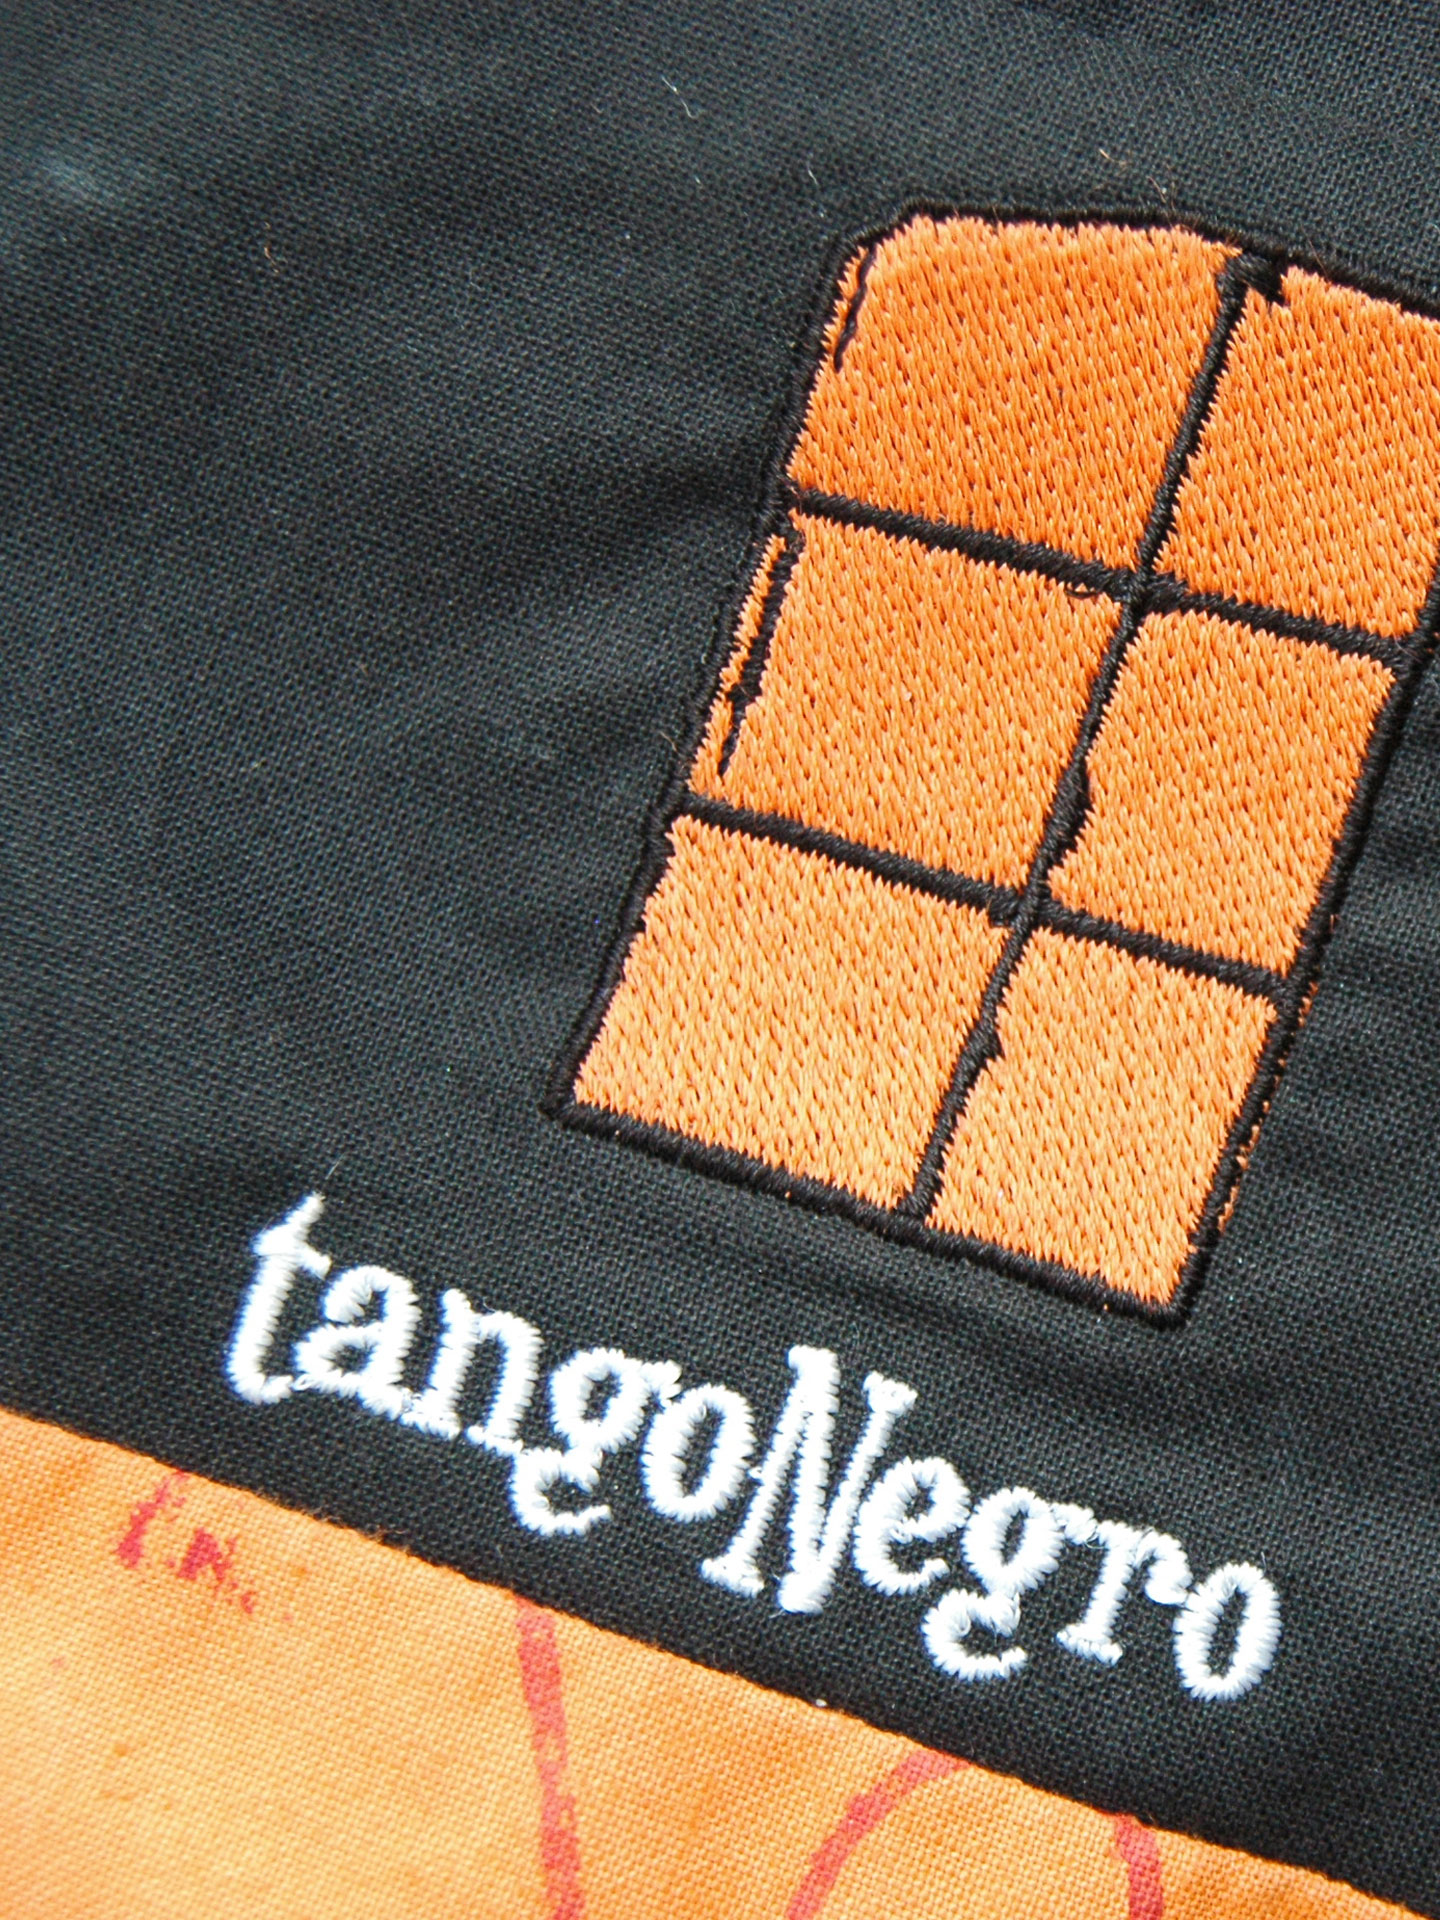 tangonegro-03